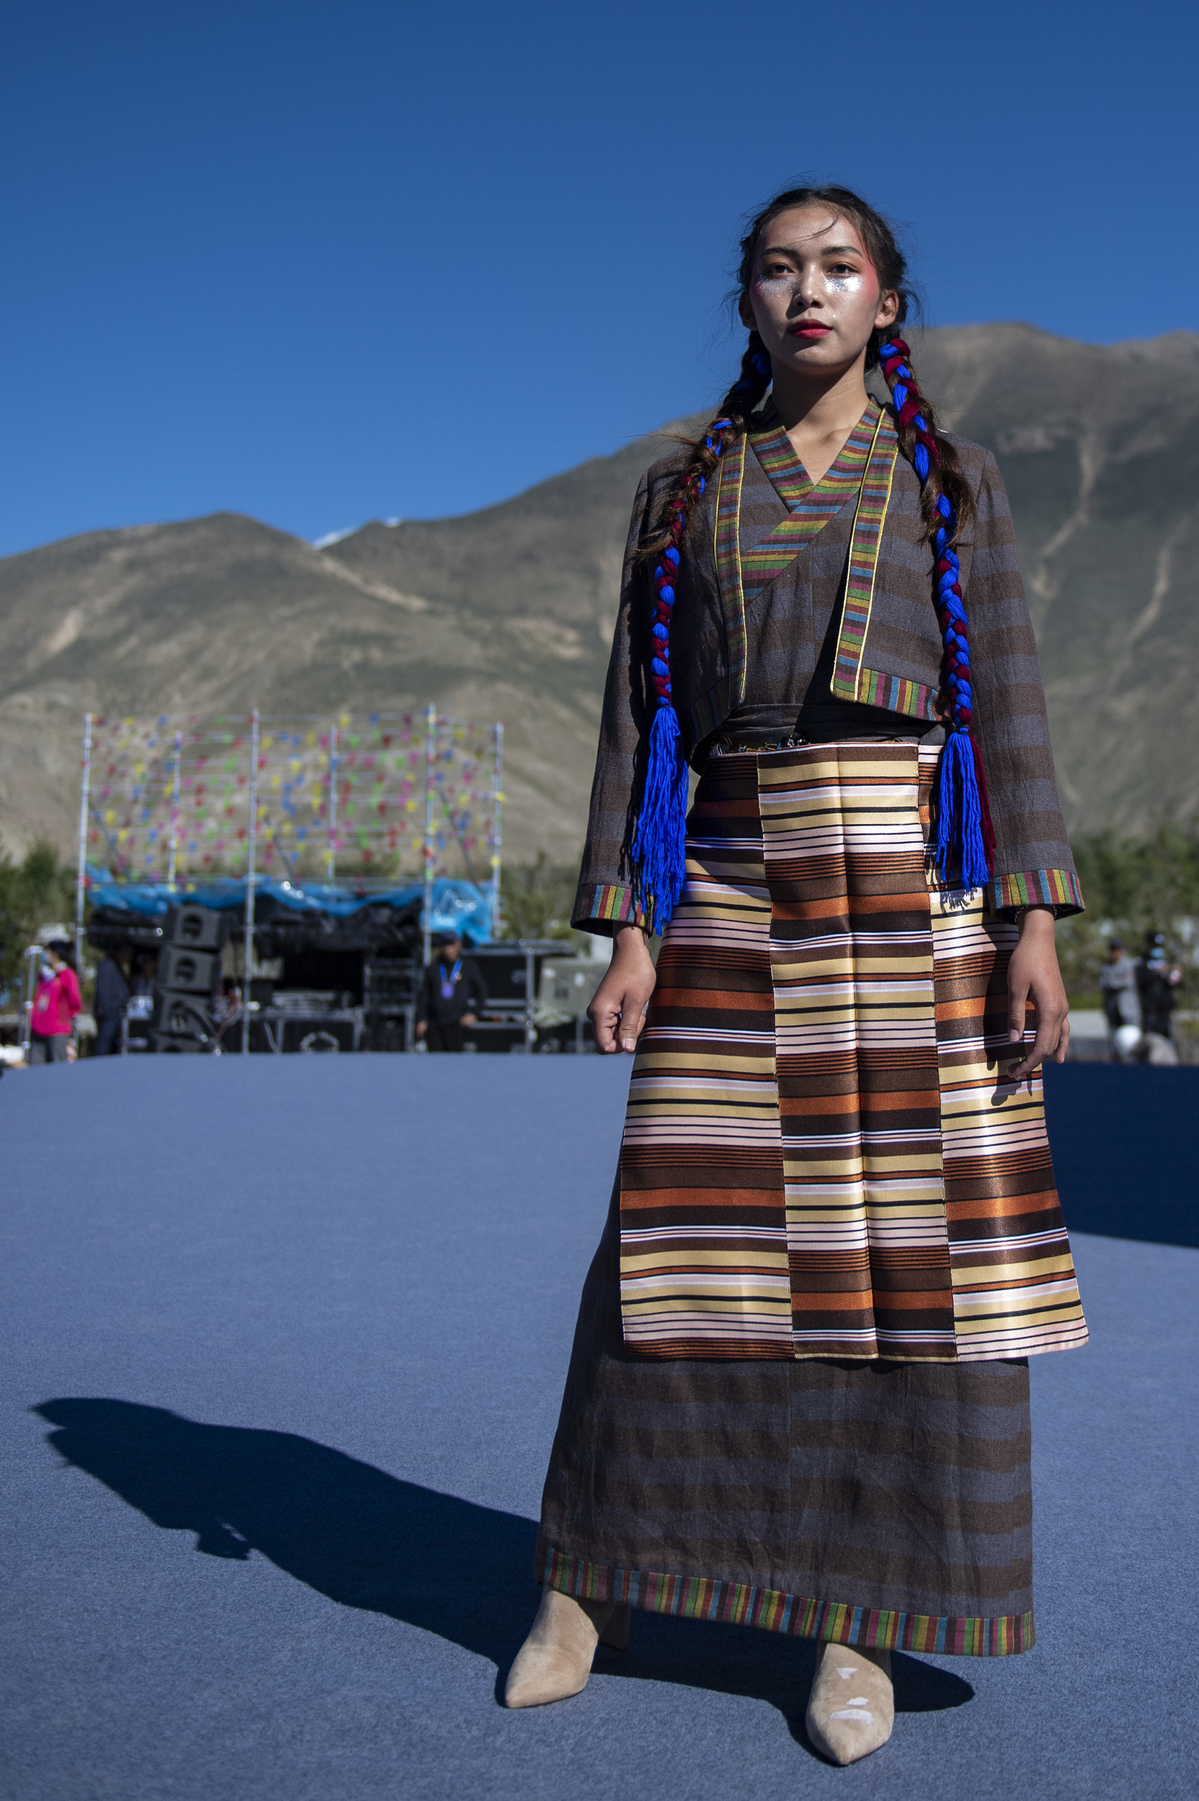 tibetan-man-hat-earrings-colorful-clothing-tibetan_S005239_-1.jpeg